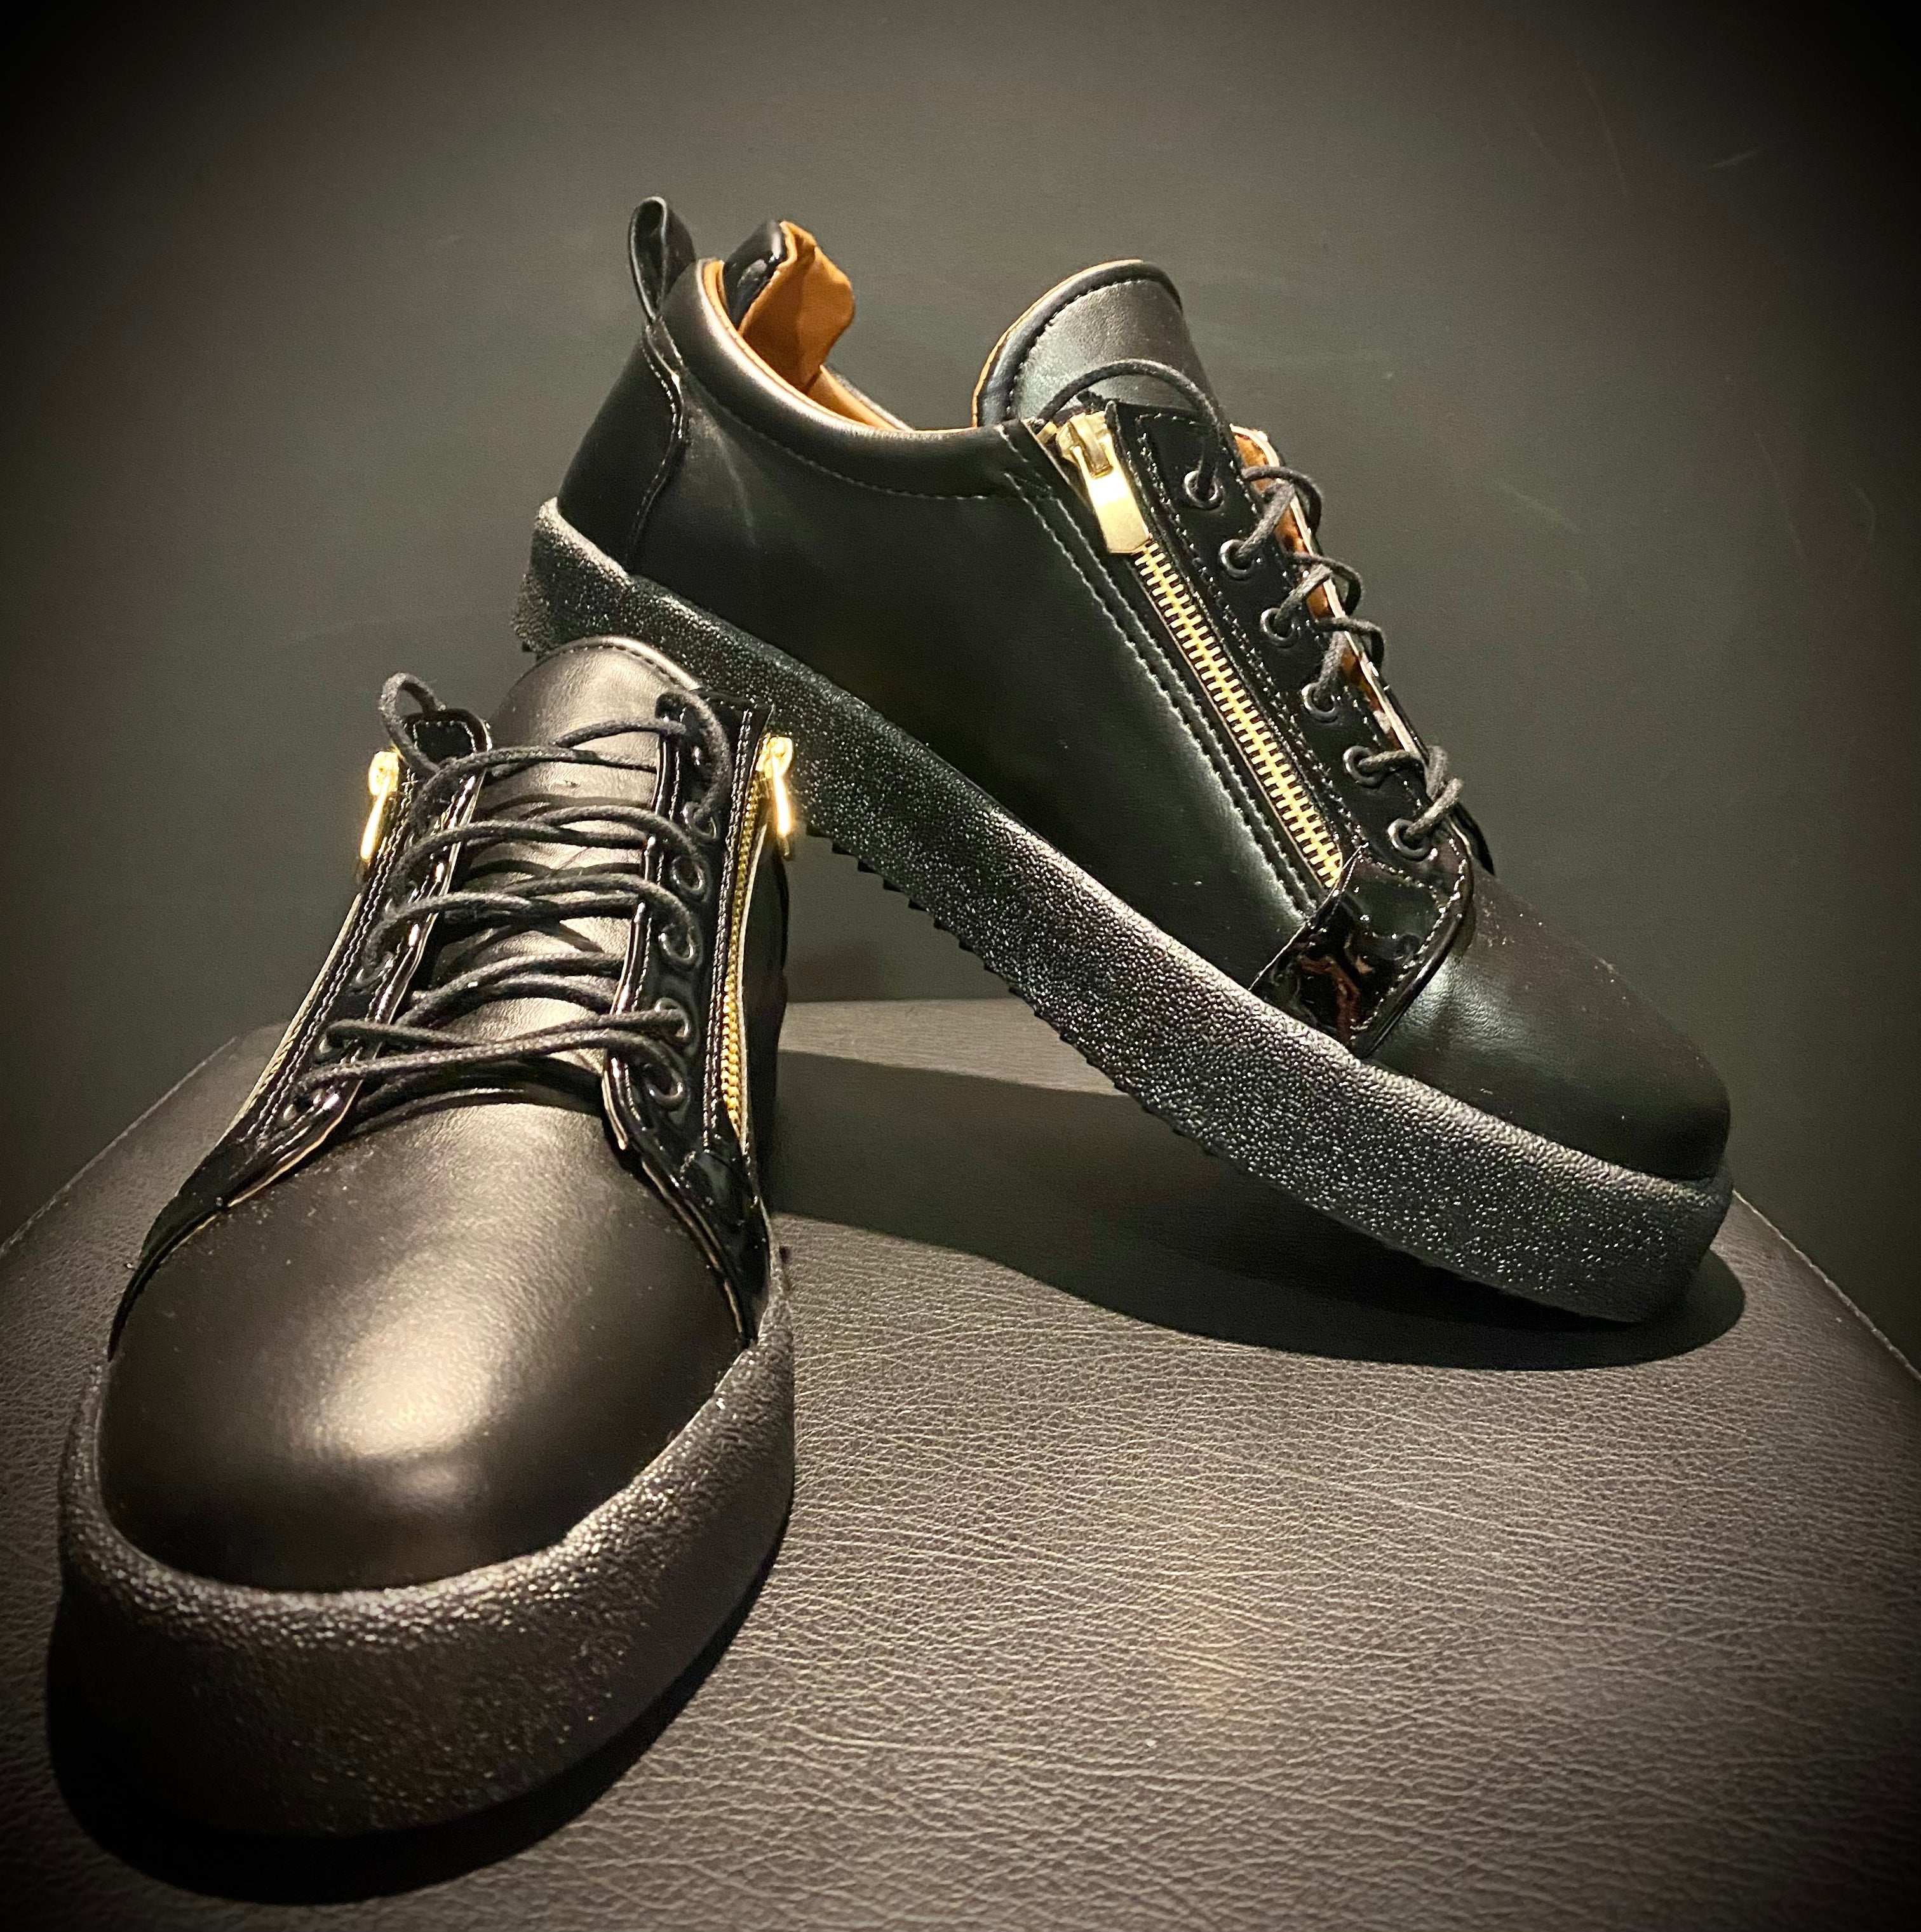 Chaussures NAC 75 black black